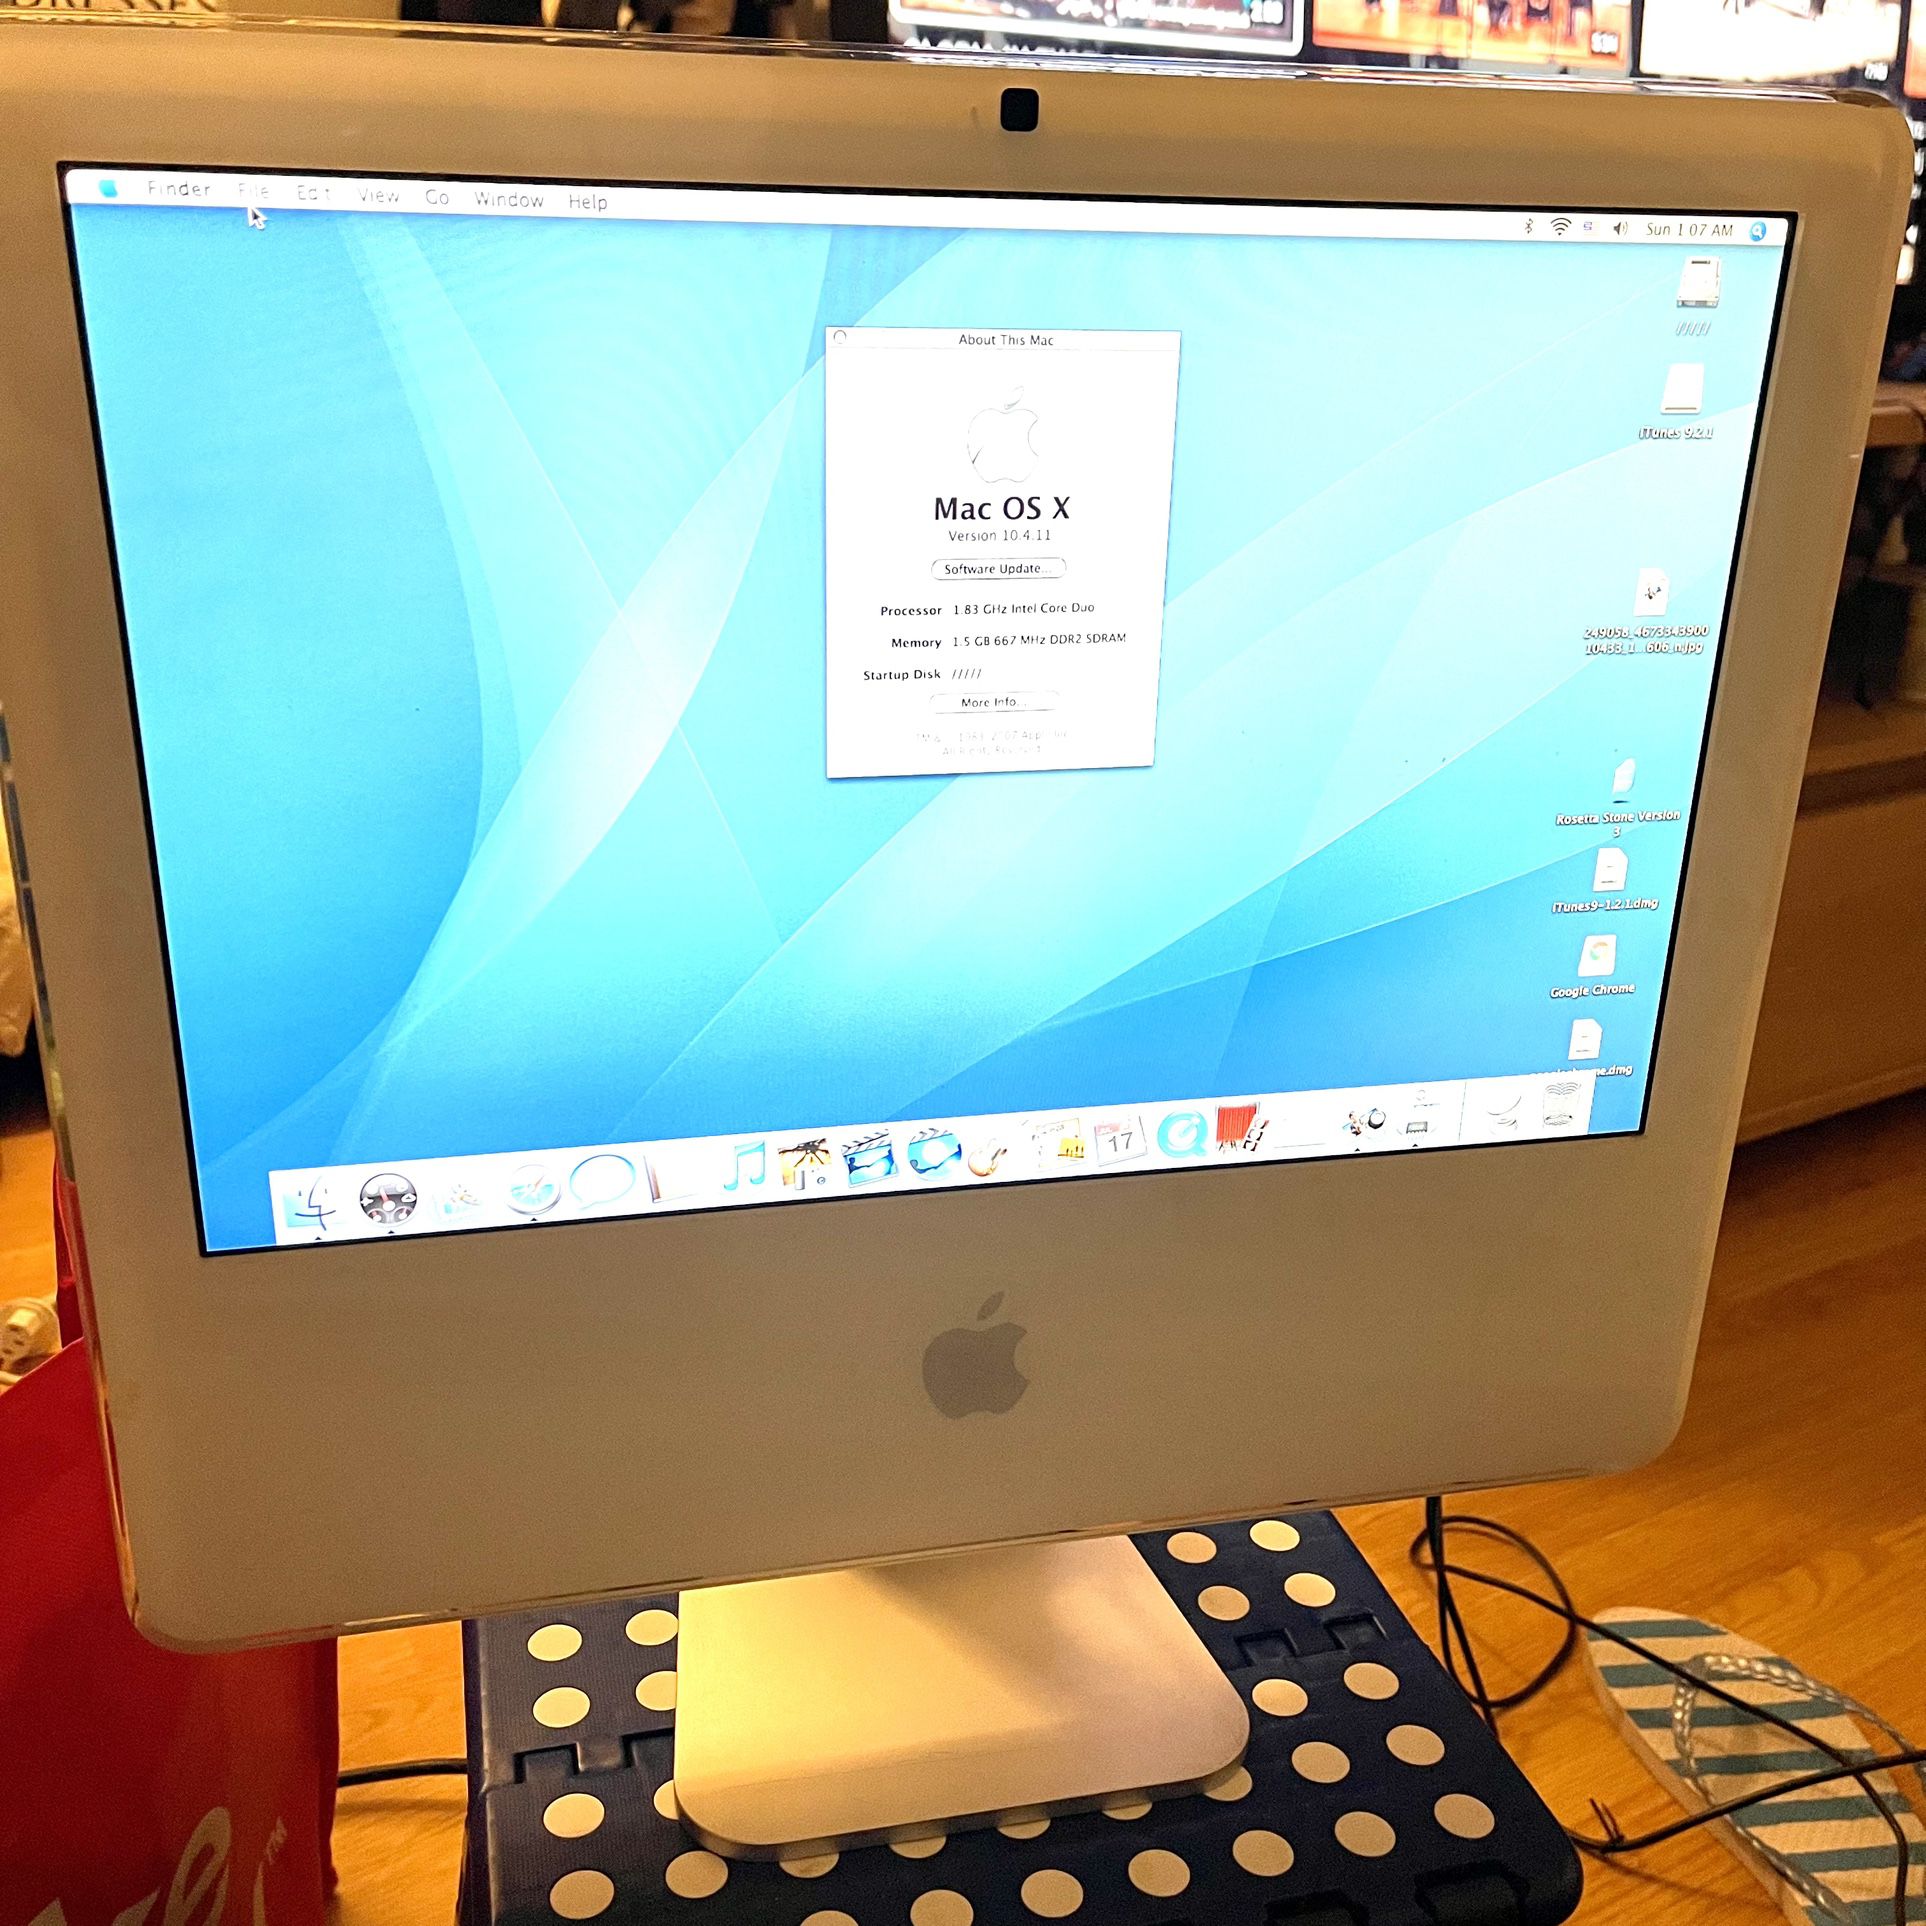 Apple iMac ALL IN ONE Desktop Computer Mac OS X 1.83GHz Intel Core Duo  Memory 150G  NEEDS OSX REINSTALLATION TO COMPLETE FACTORY RESET, RUNS SAFARI B